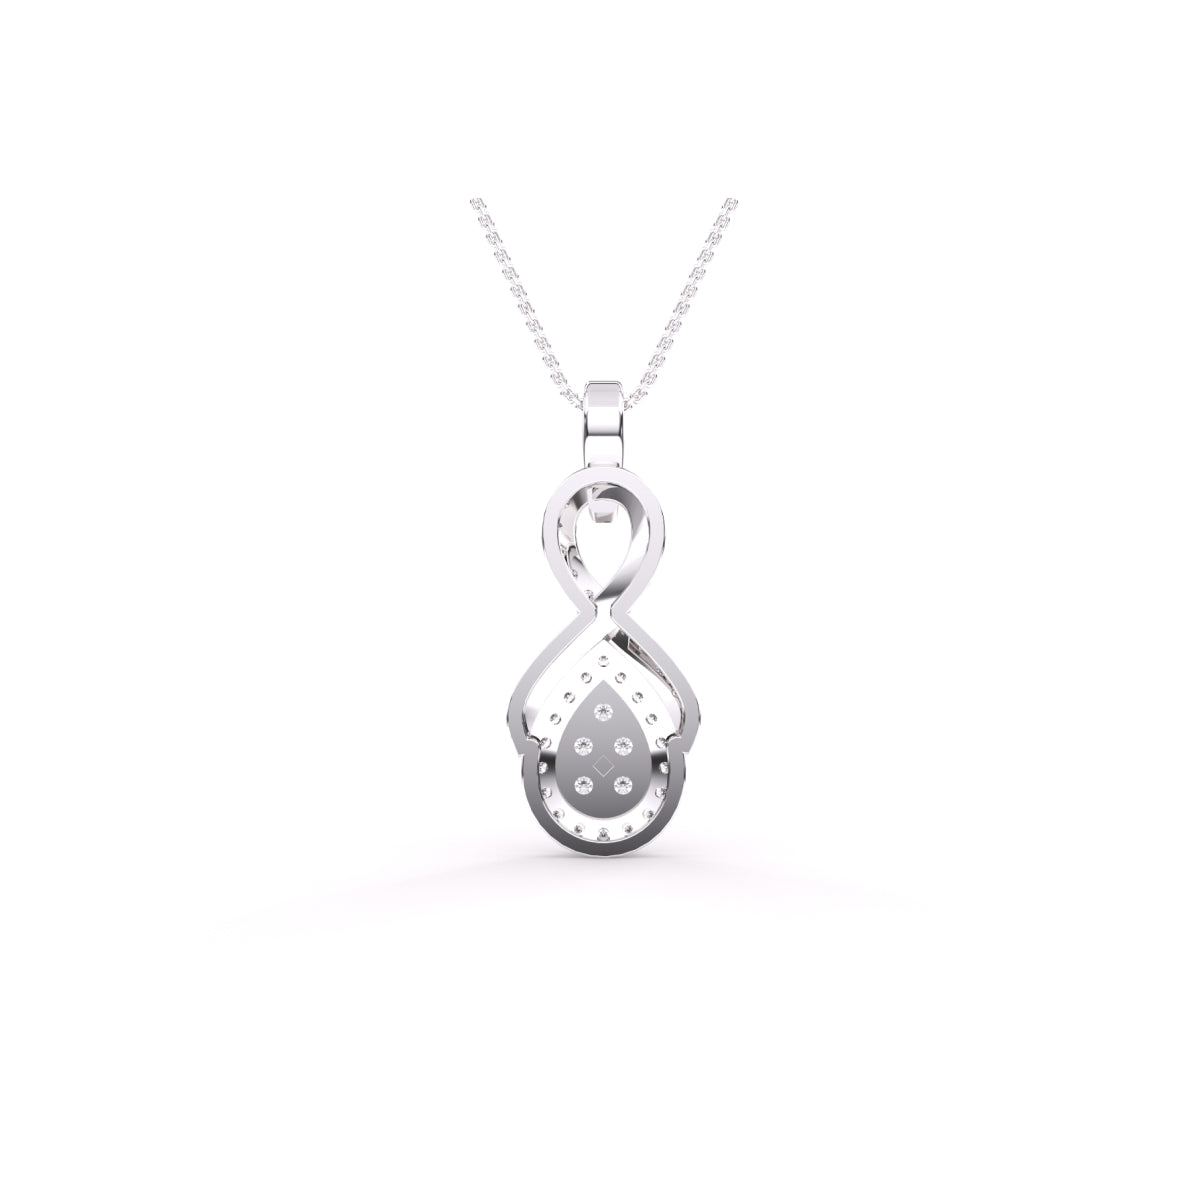 Buy Infinity Necklace, Diamond Pendant Necklace, White Gold Necklace,  Infinity Knot Necklace, Gold Pendant, Handmade Jewelry Online in India -  Etsy